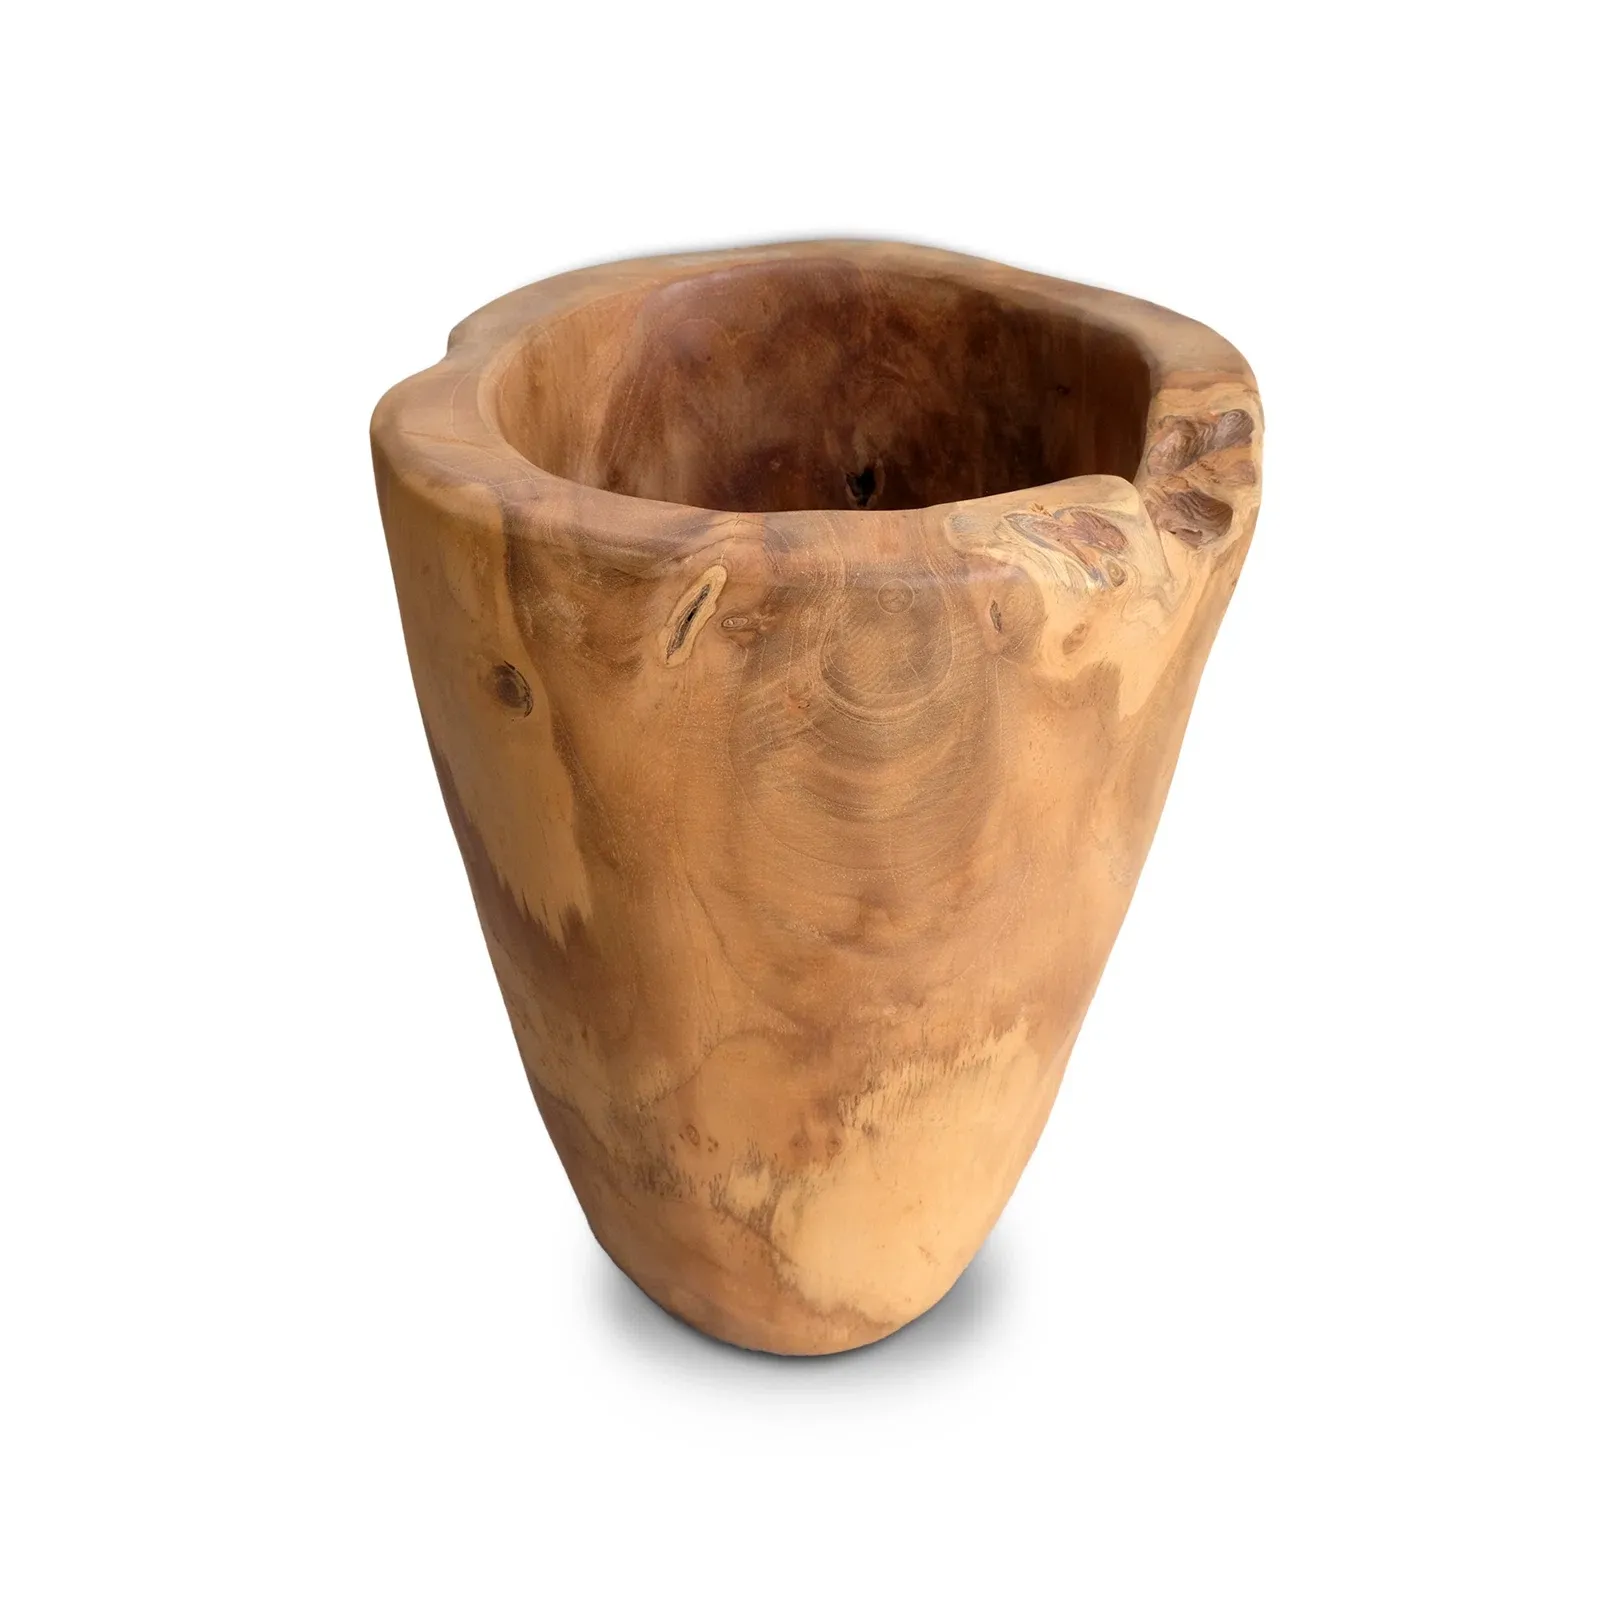 wholesale 12'' Wood Decorative Bowl root wood bowl for home decora wooden flower vase for decora center pieces